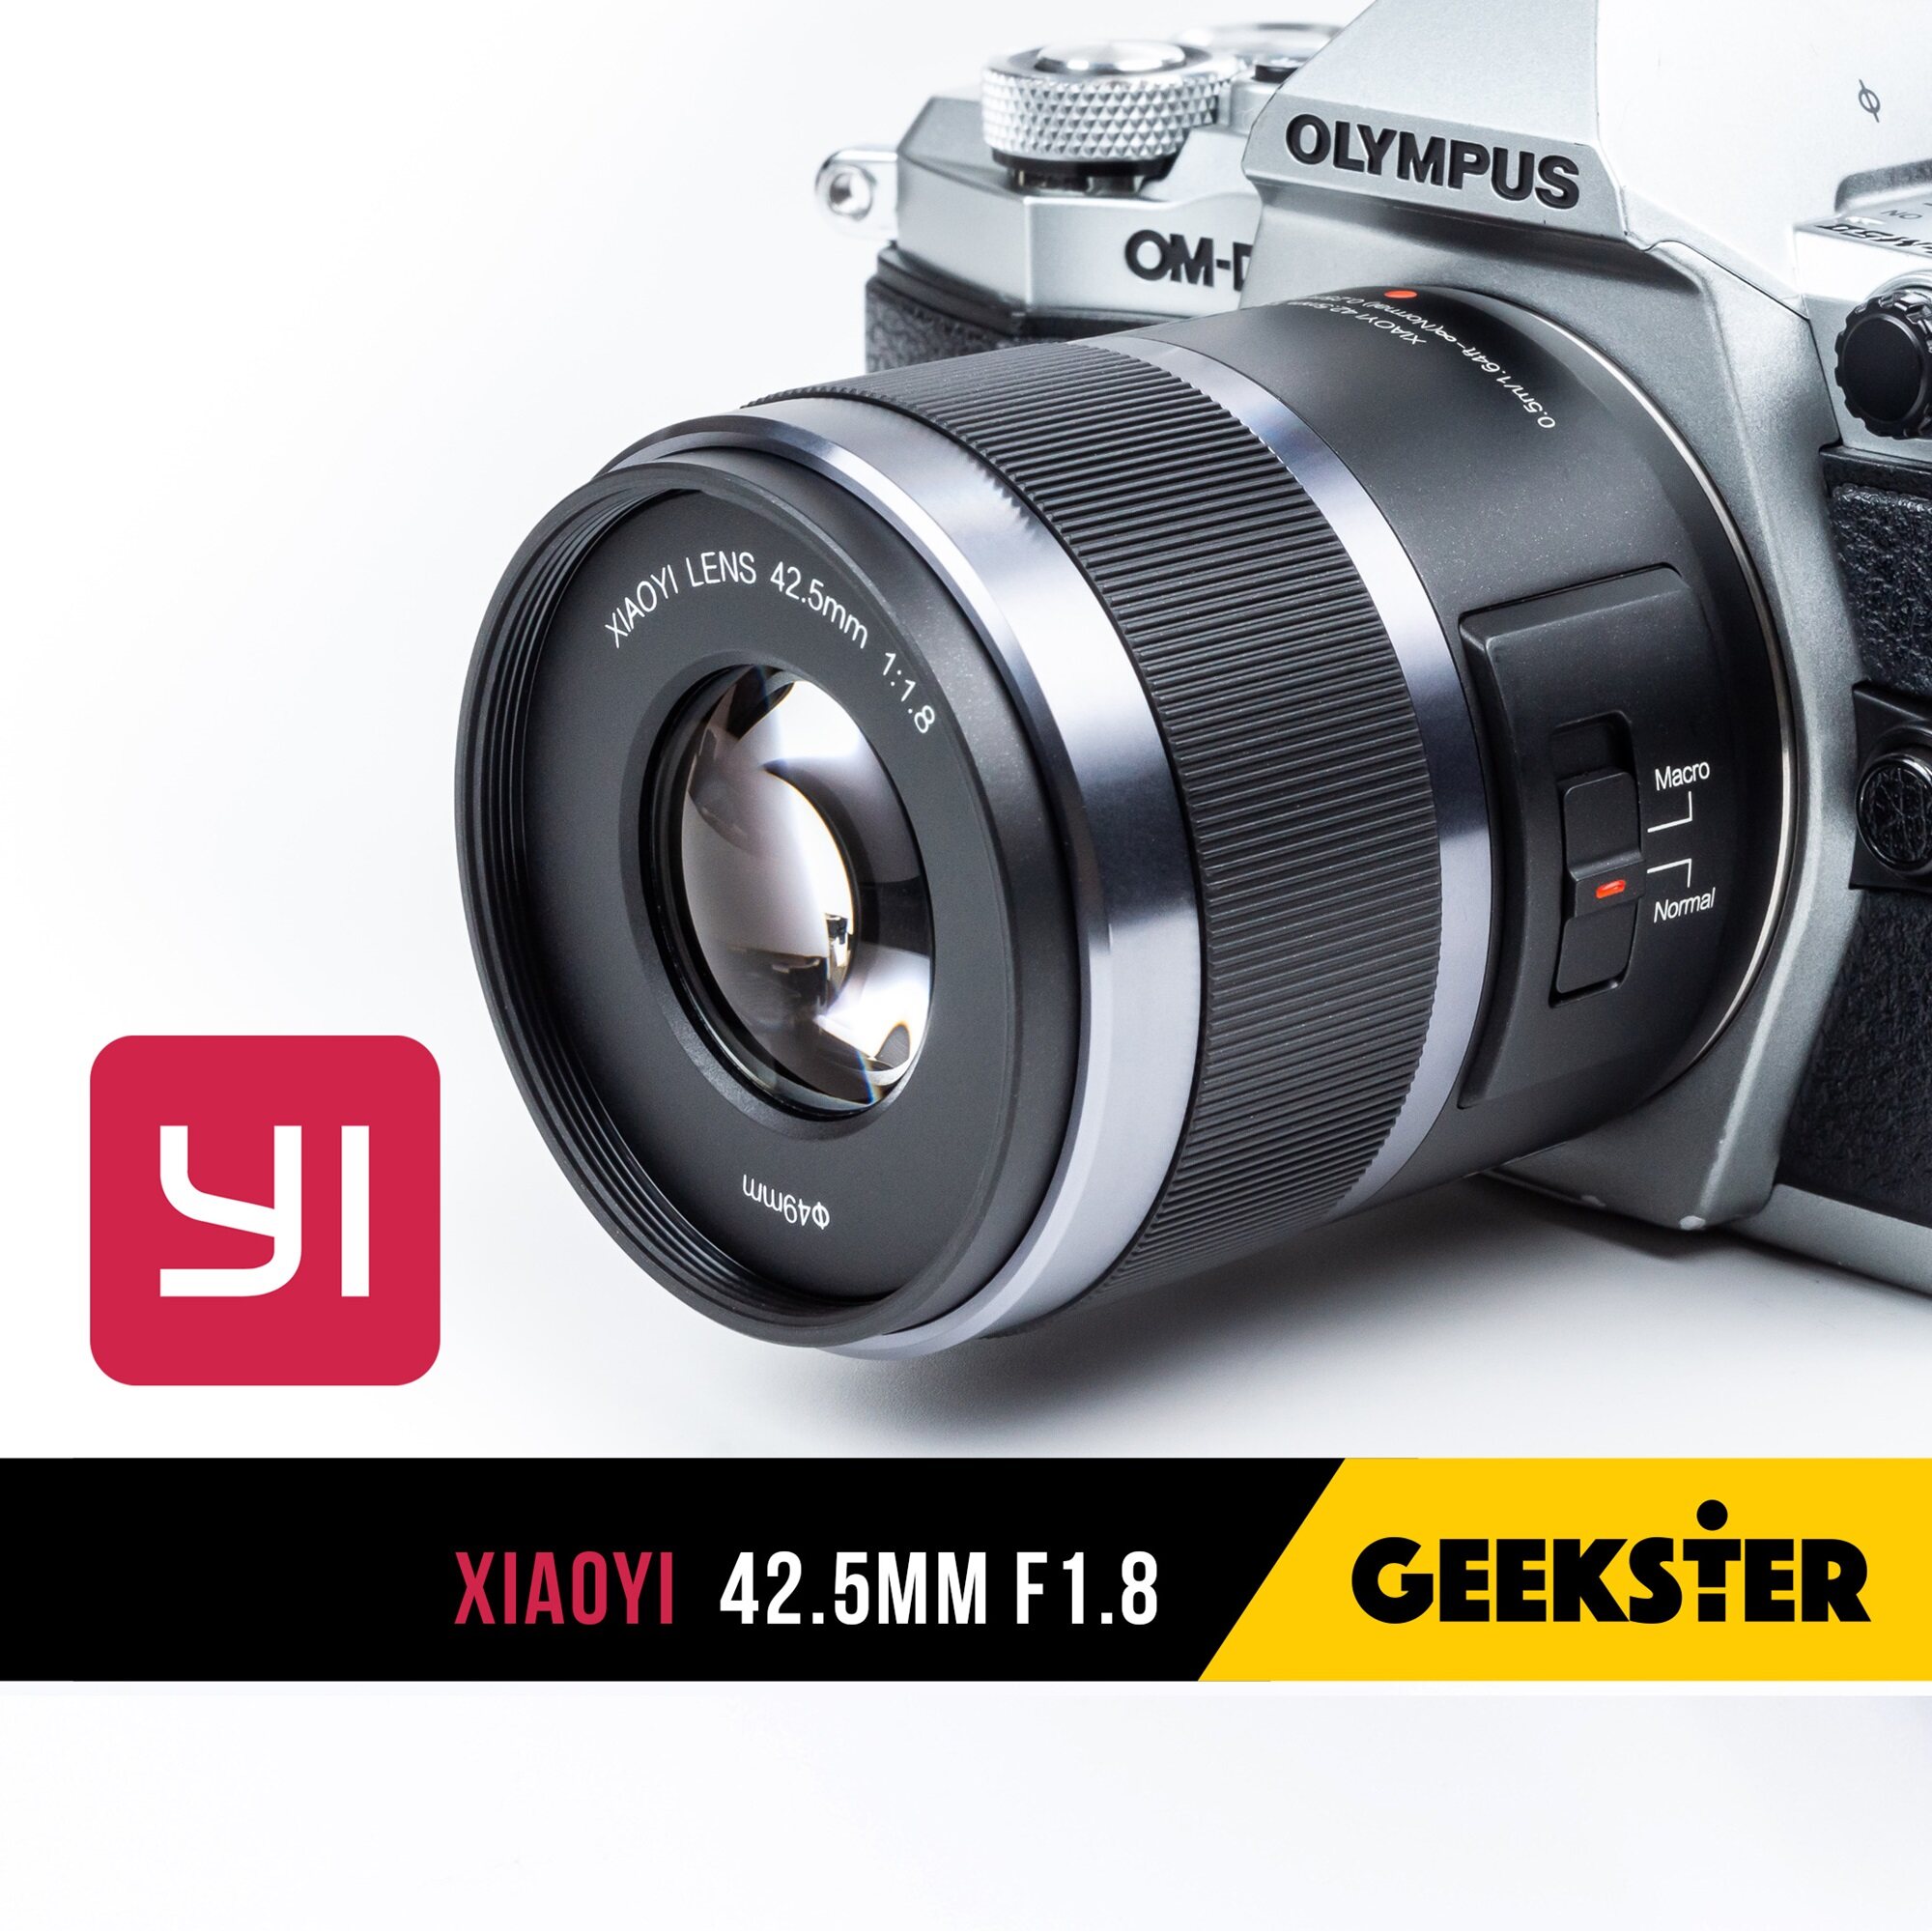 Xiaoyi 42.5mm F1.8 M43 เลนส์ออโต้โฟกัส สำหรับใส่กล้อง OLYMPUS AND PANASONIC LUMIX Mirrorless ได้ทุกรุ่น ( YI AUTO FOCUS Lens 42.5 mm F 1.8 ) ( AF / MF ) ( เลนส์ละลาย ) ( หน้าชัดหลังเบลอ ) ( สำหรับ กล้อง โอลิมปัส และ พานาโซนิค ) ( ออโตโฟกัส ) Macro มาโคร